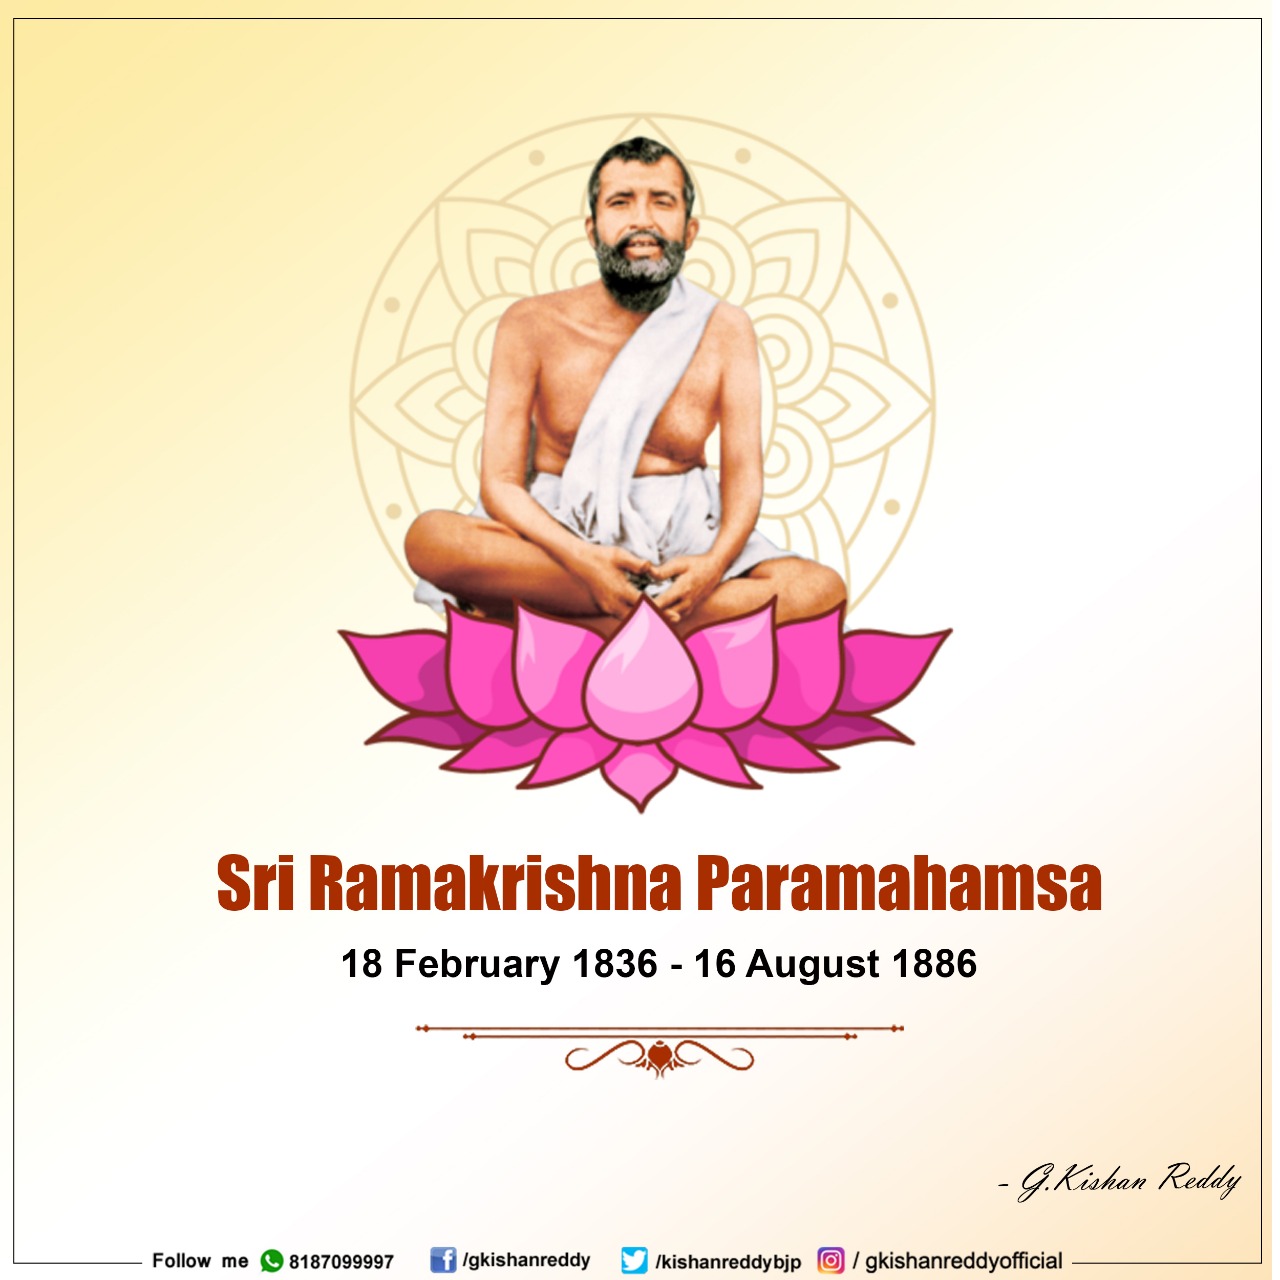 Large Collection of Stunning 4K Images of Ramakrishna Paramahamsa